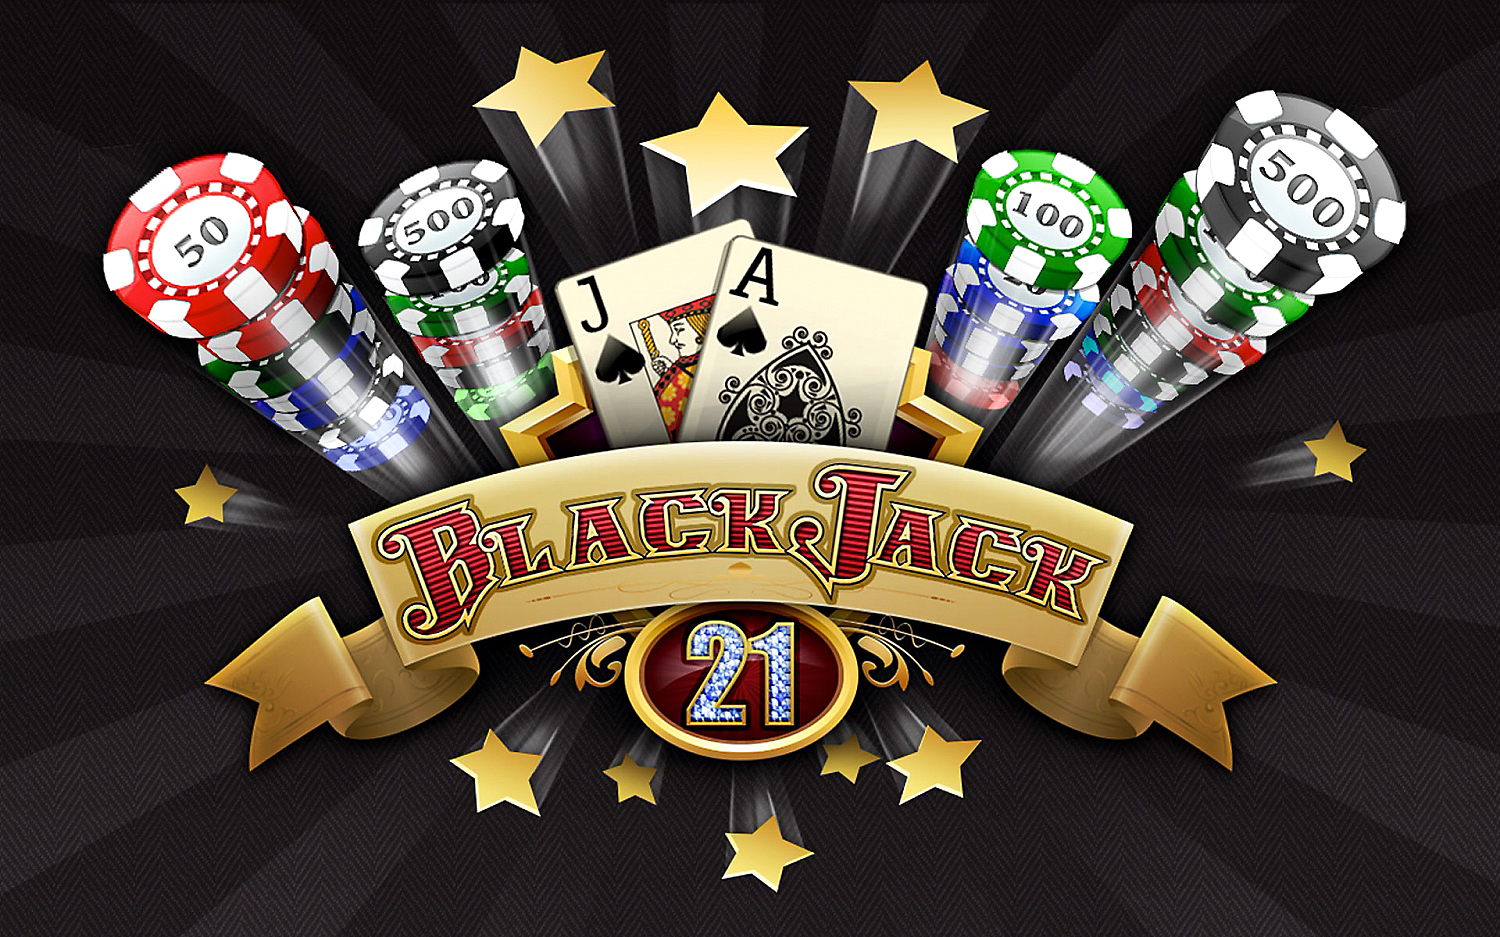 blackjack classic 60